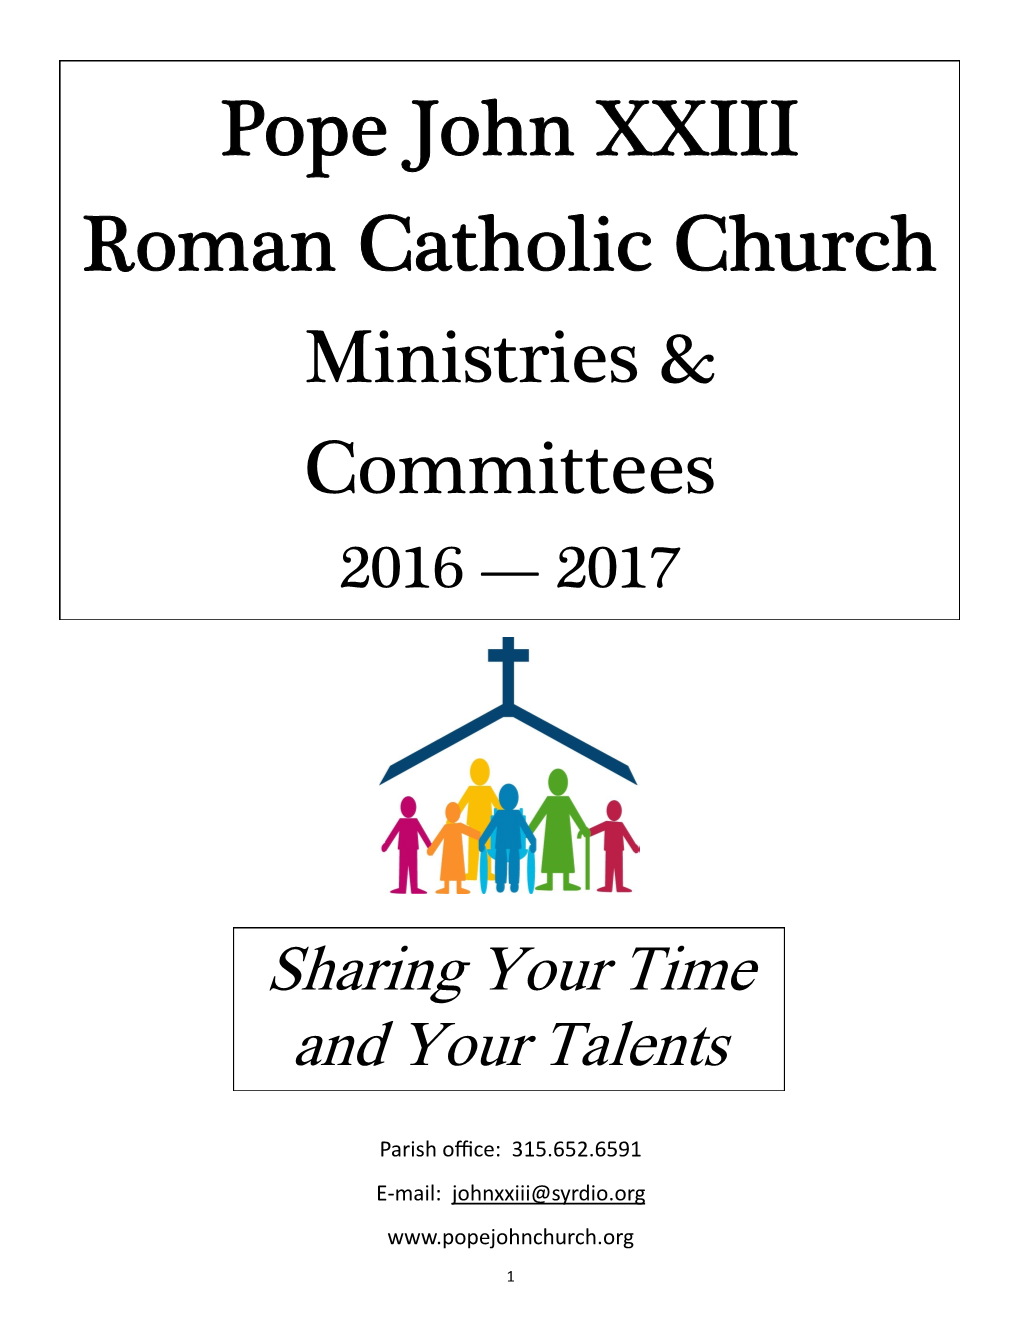 Pope John XXIII Roman Catholic Church Ministries & Committees 2016 — 2017